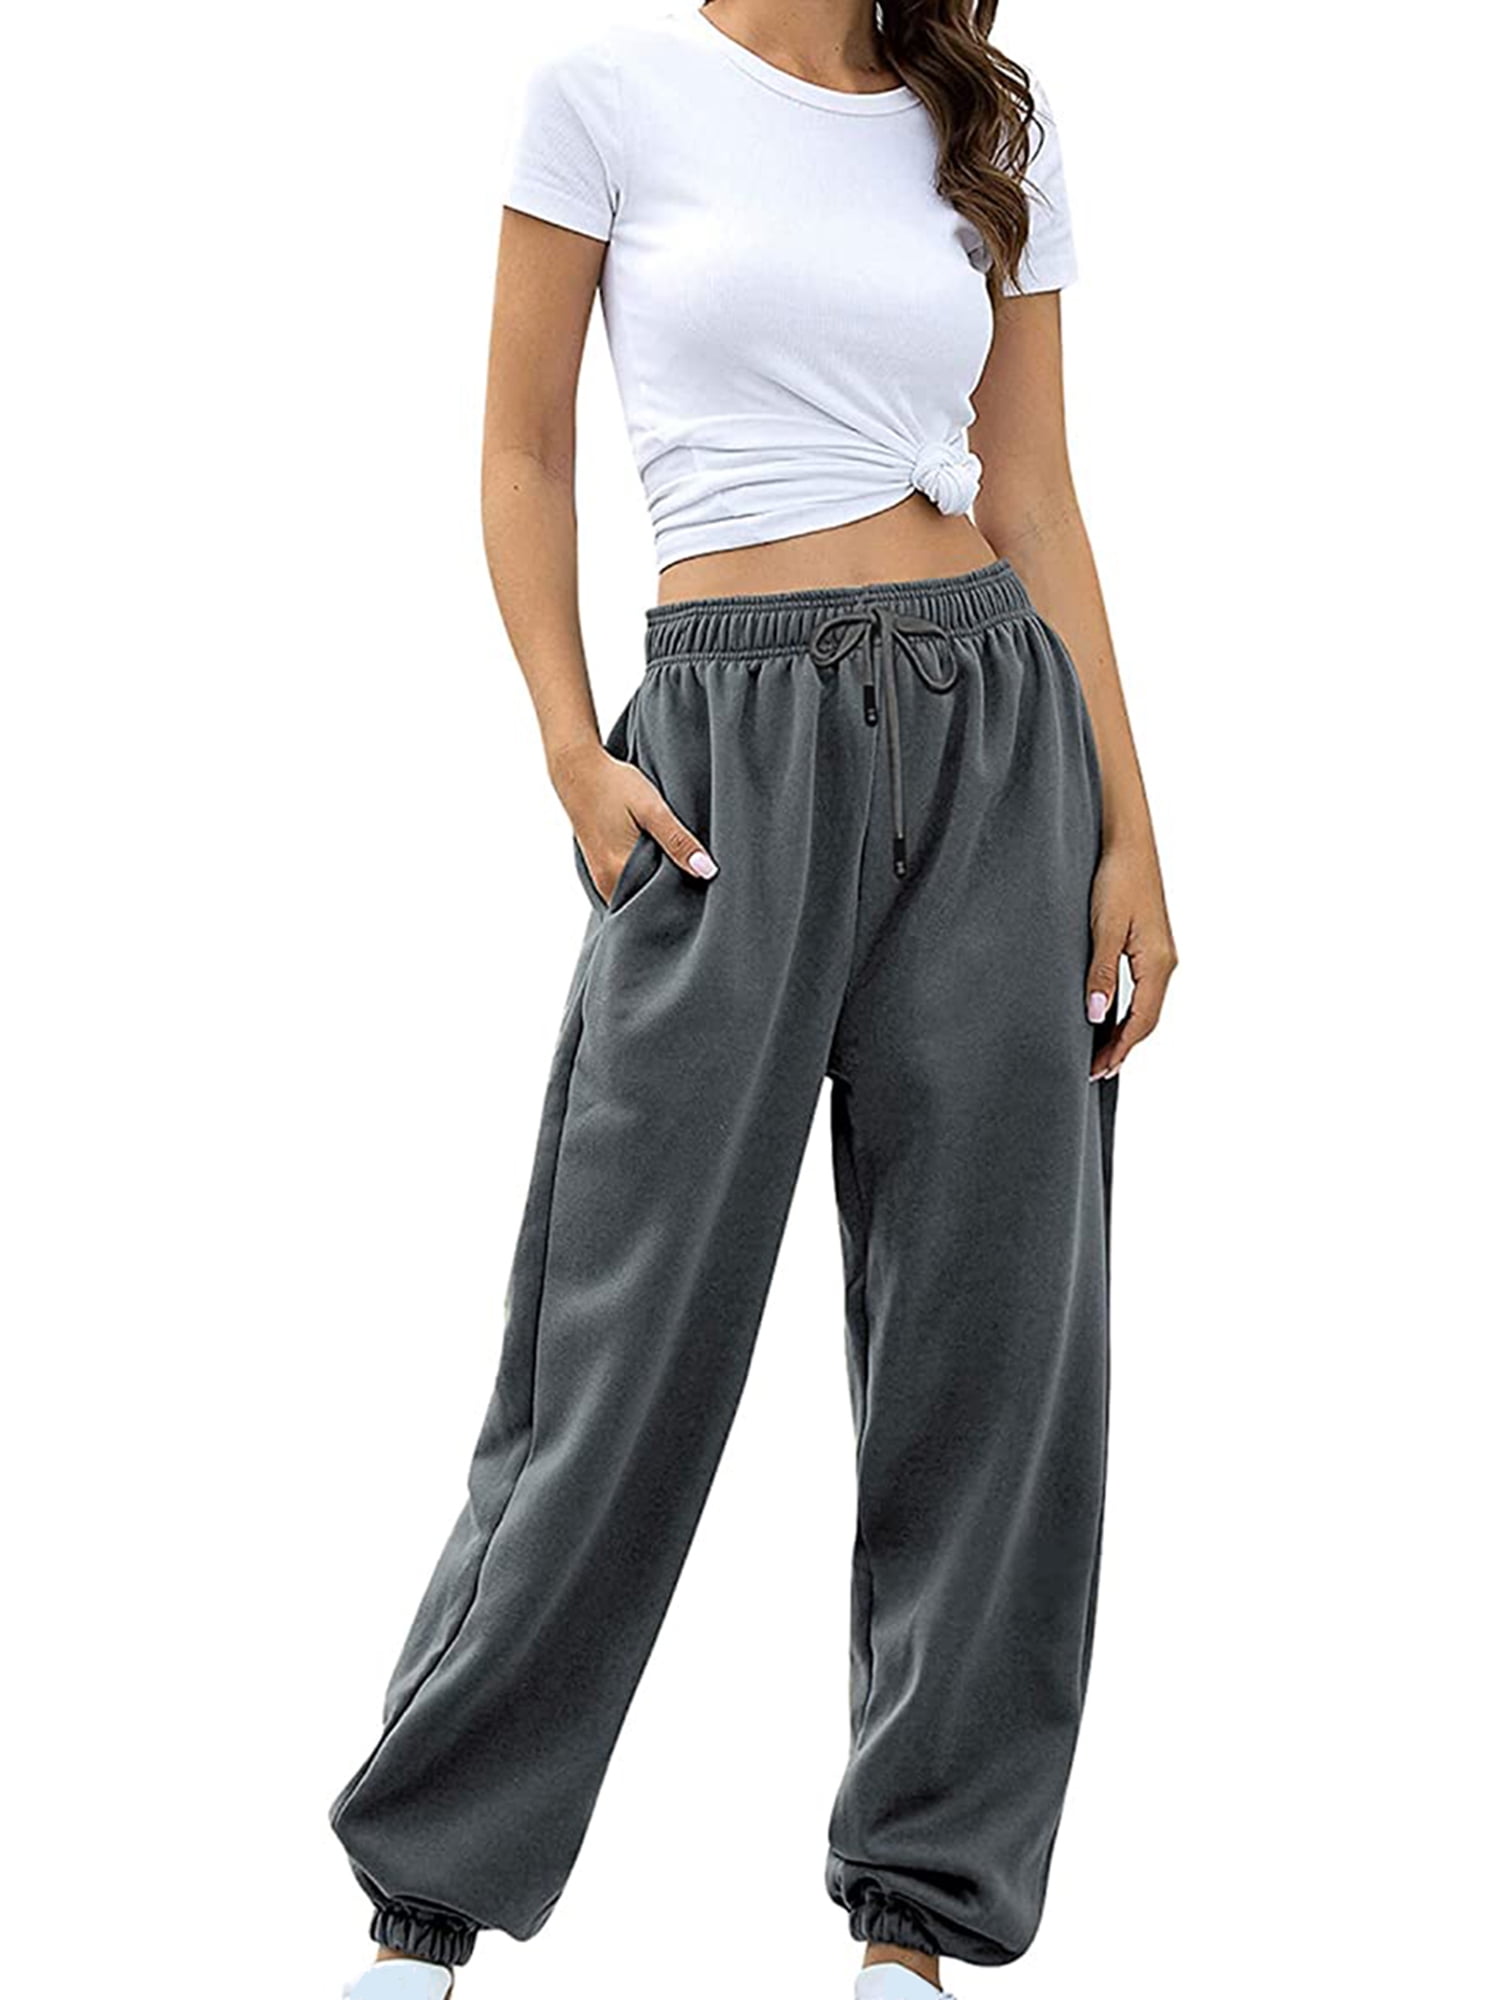 DGZTWLL Women's Tapered Pants Plus Size Cinch Bottom Sweatpants